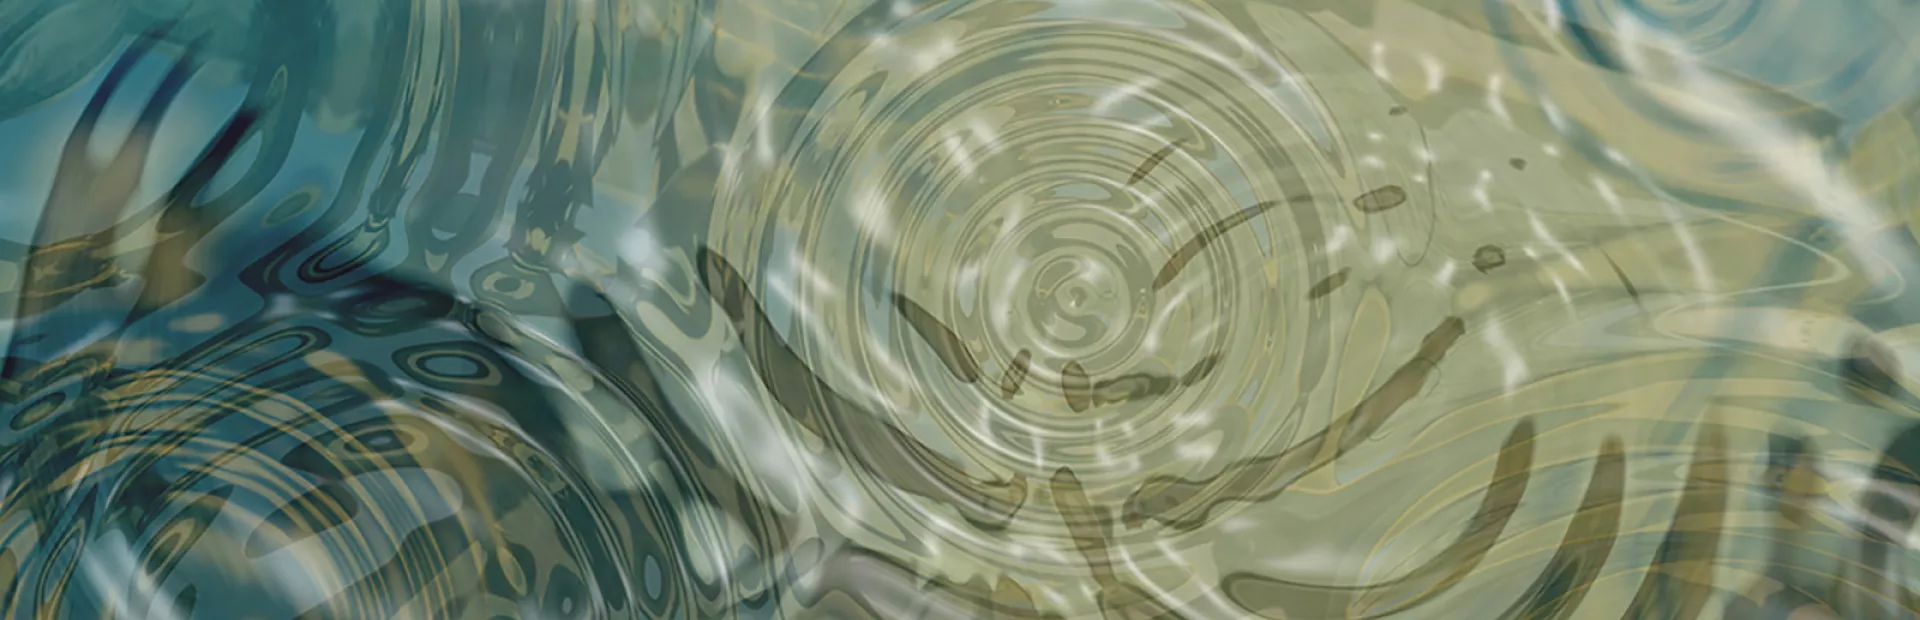 ripples in water 1600x800 stripe image_0